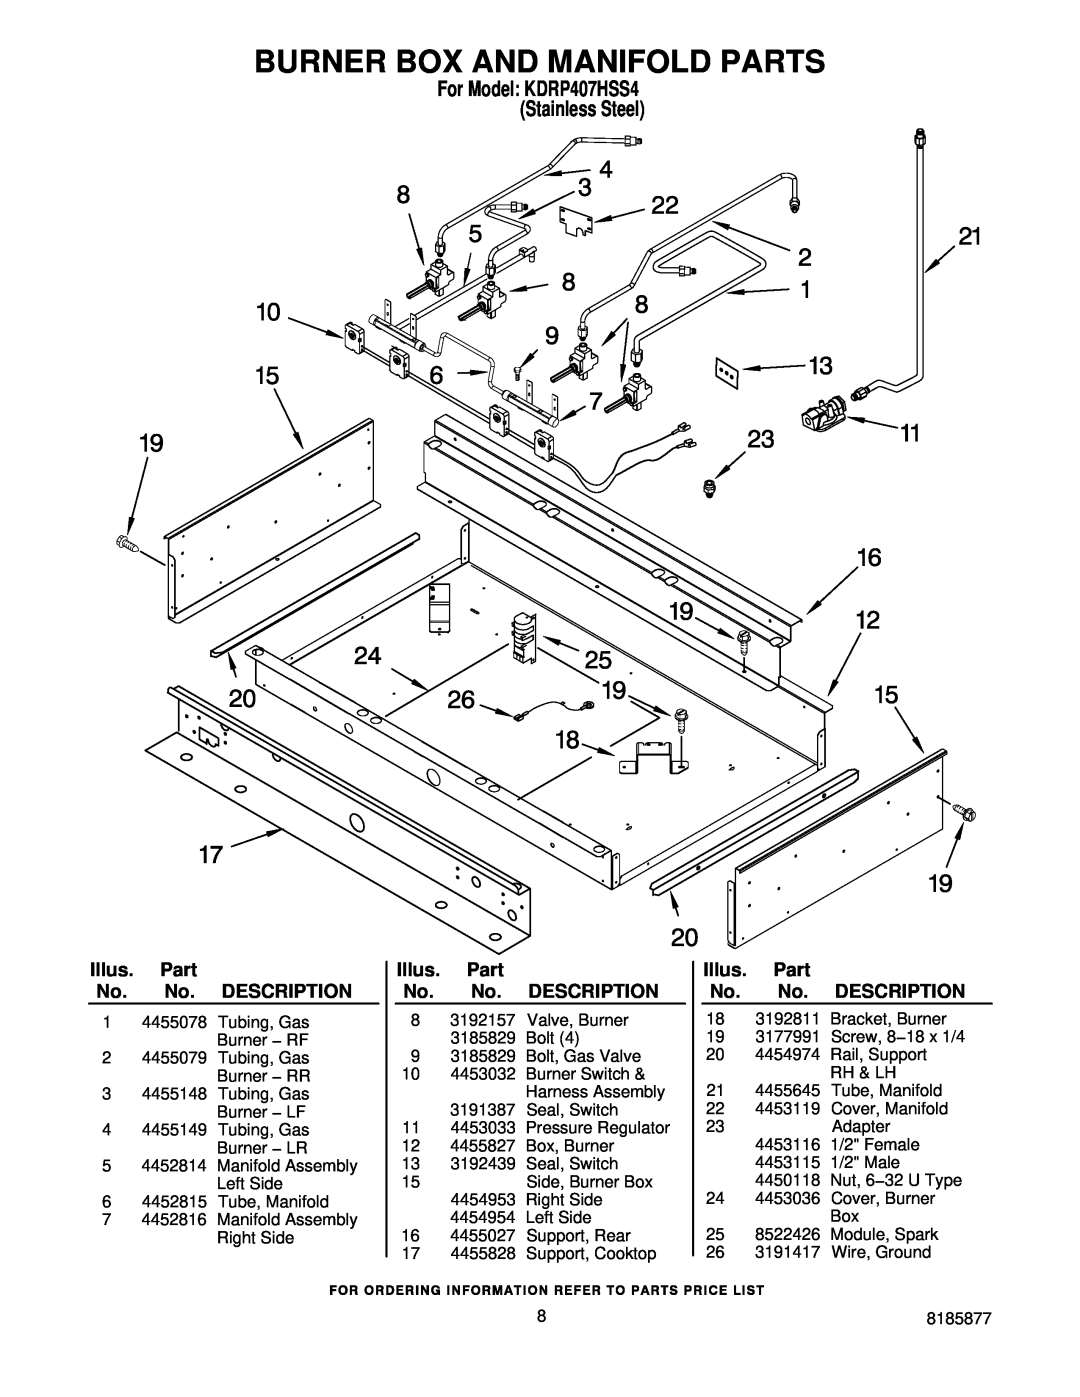 KitchenAid manual Burner Box And Manifold Parts, For Model KDRP407HSS4 Stainless Steel, Illus. Part No. No. DESCRIPTION 